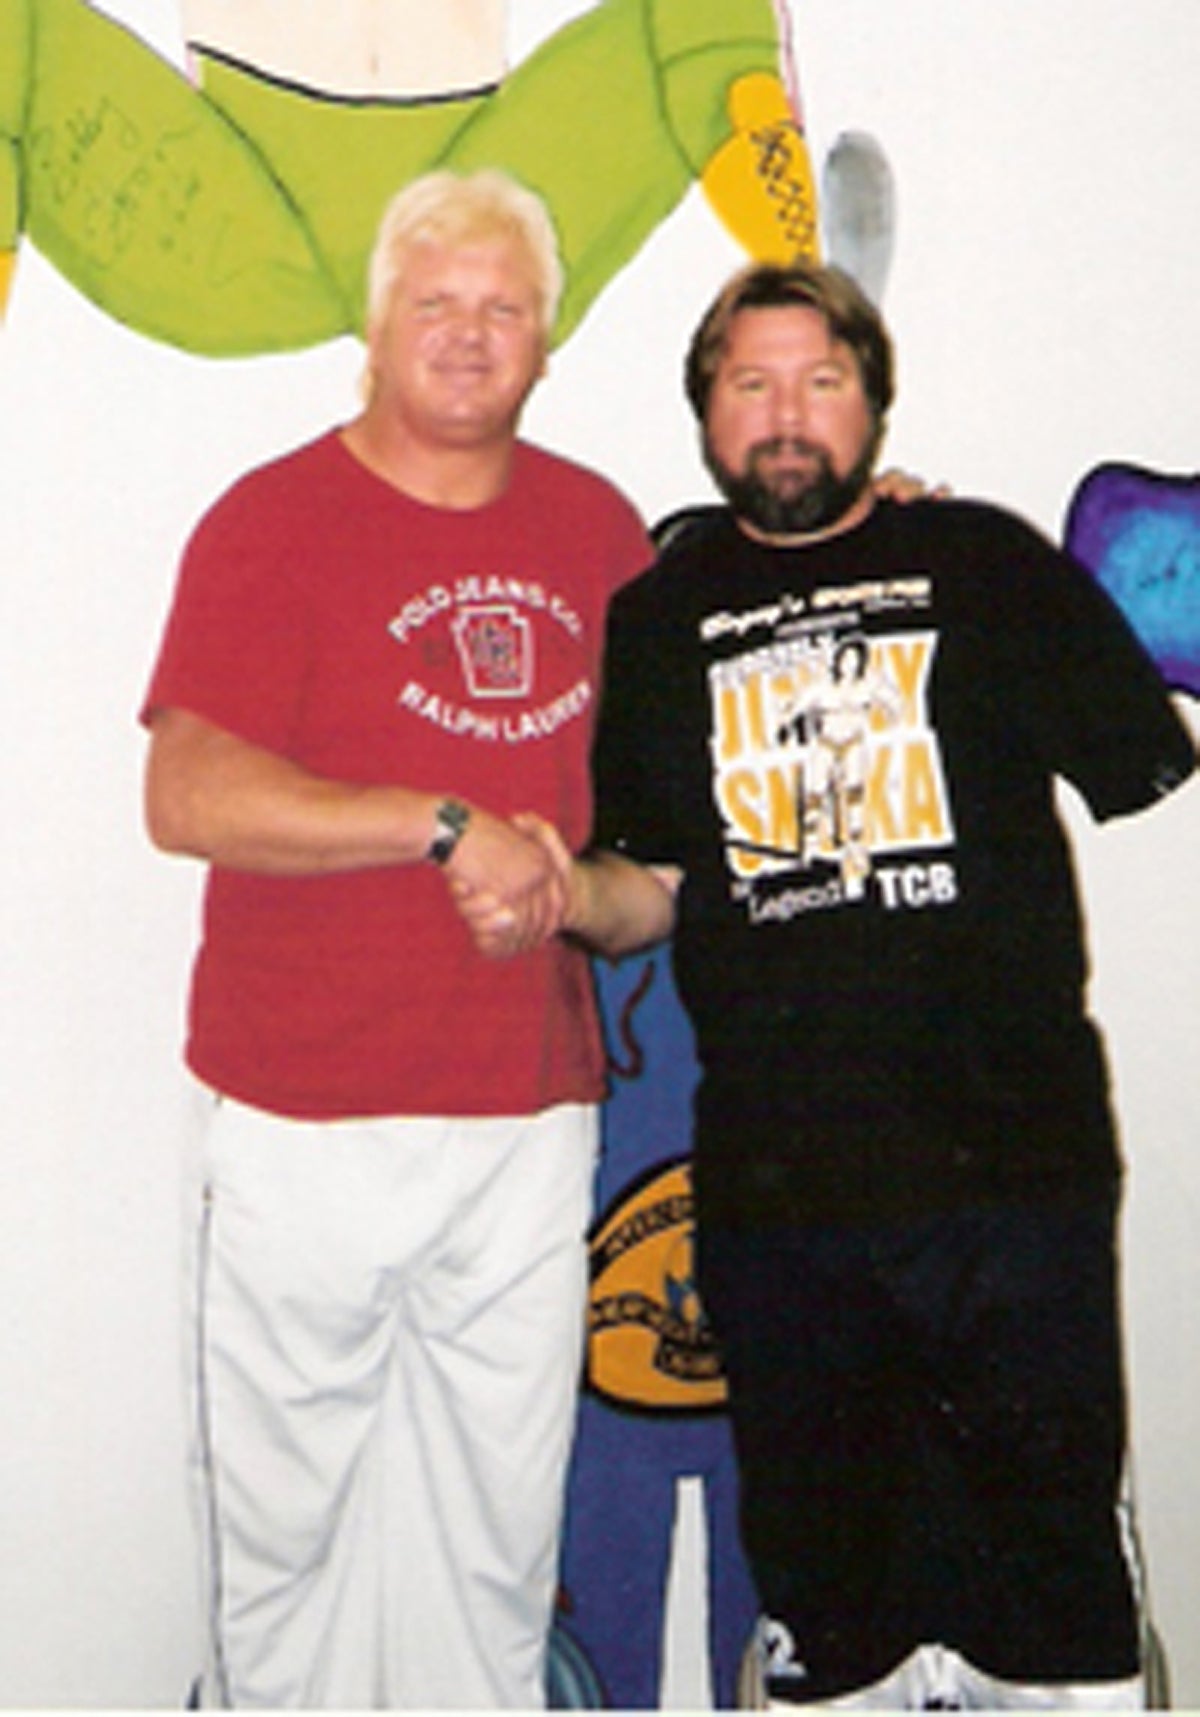 MBSM4 Misty Blue Simmes Ric Flair Sting Barry Windham Bobby Eaton Ricky Morton   Autographed Vintage Wrestling Magazine w/COA